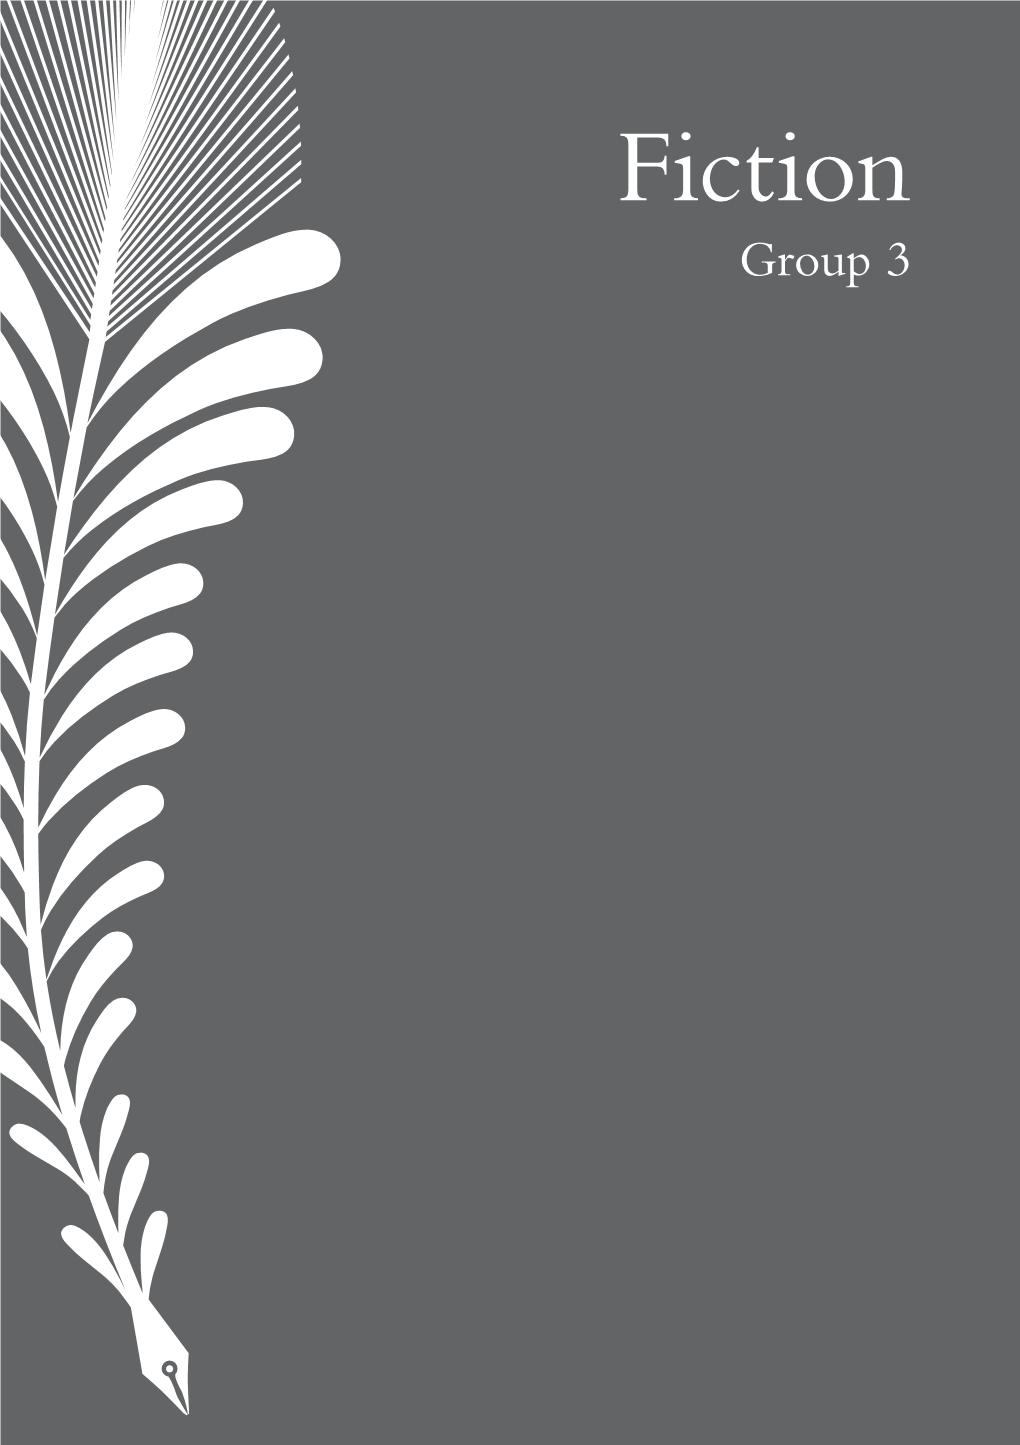 Fiction Group 3 Fiction – Group 3